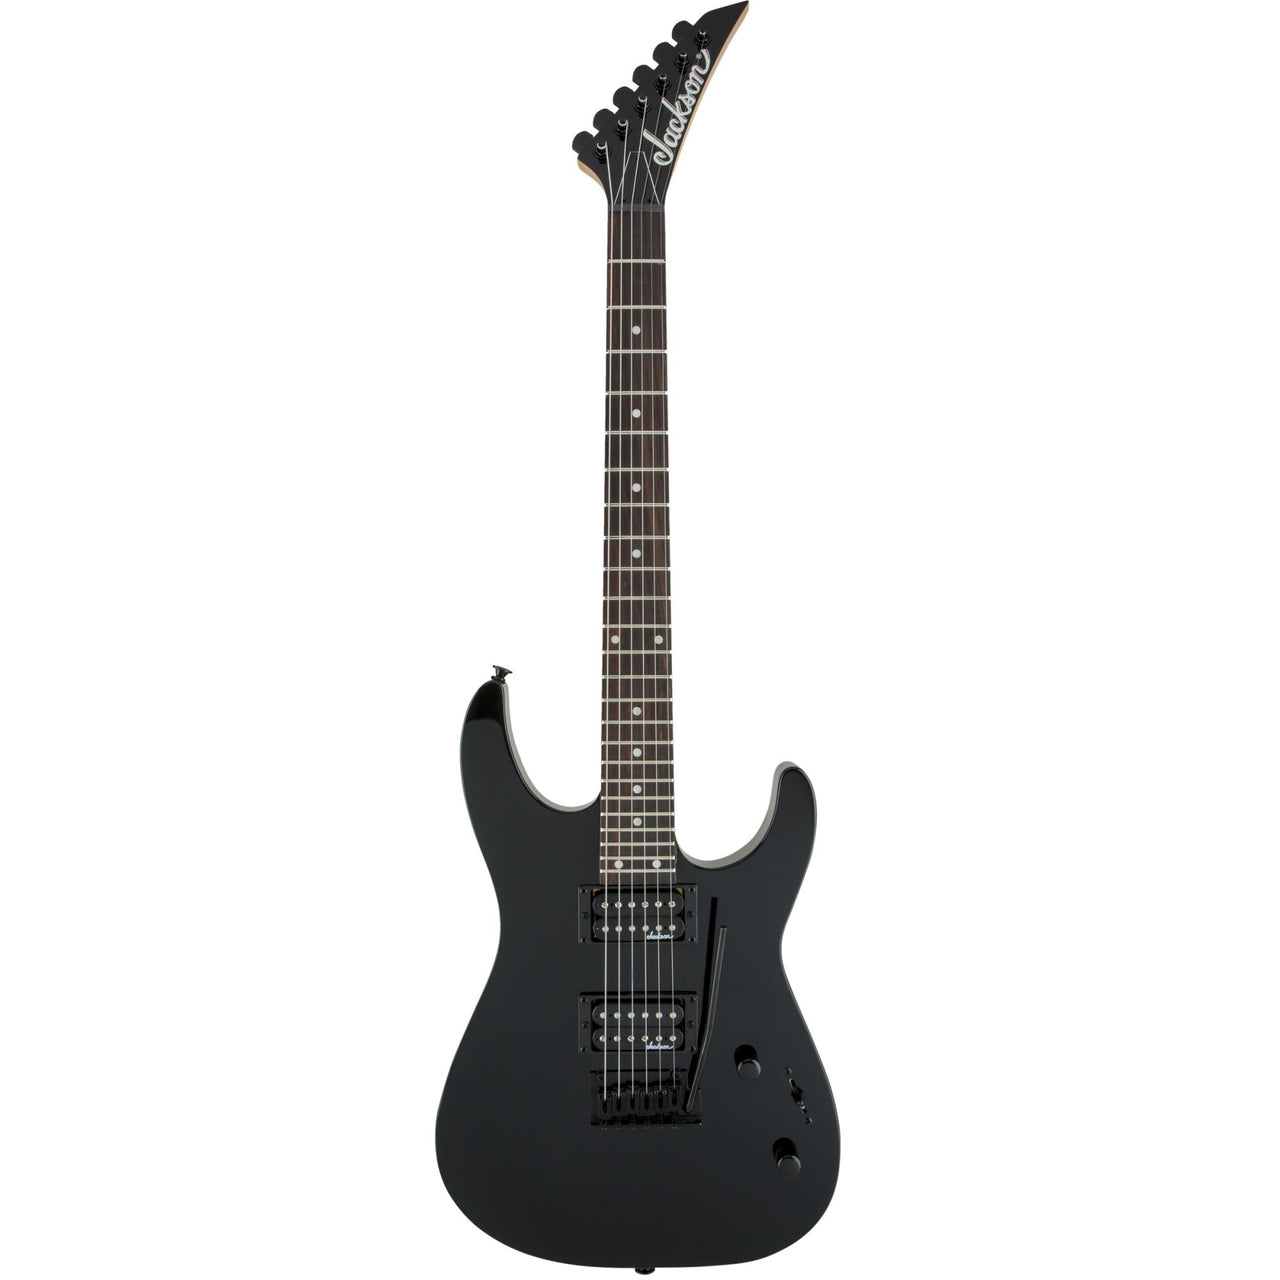 Guitarra Electrica Jackson Js12 Dinky Gloss Black, 2910112503